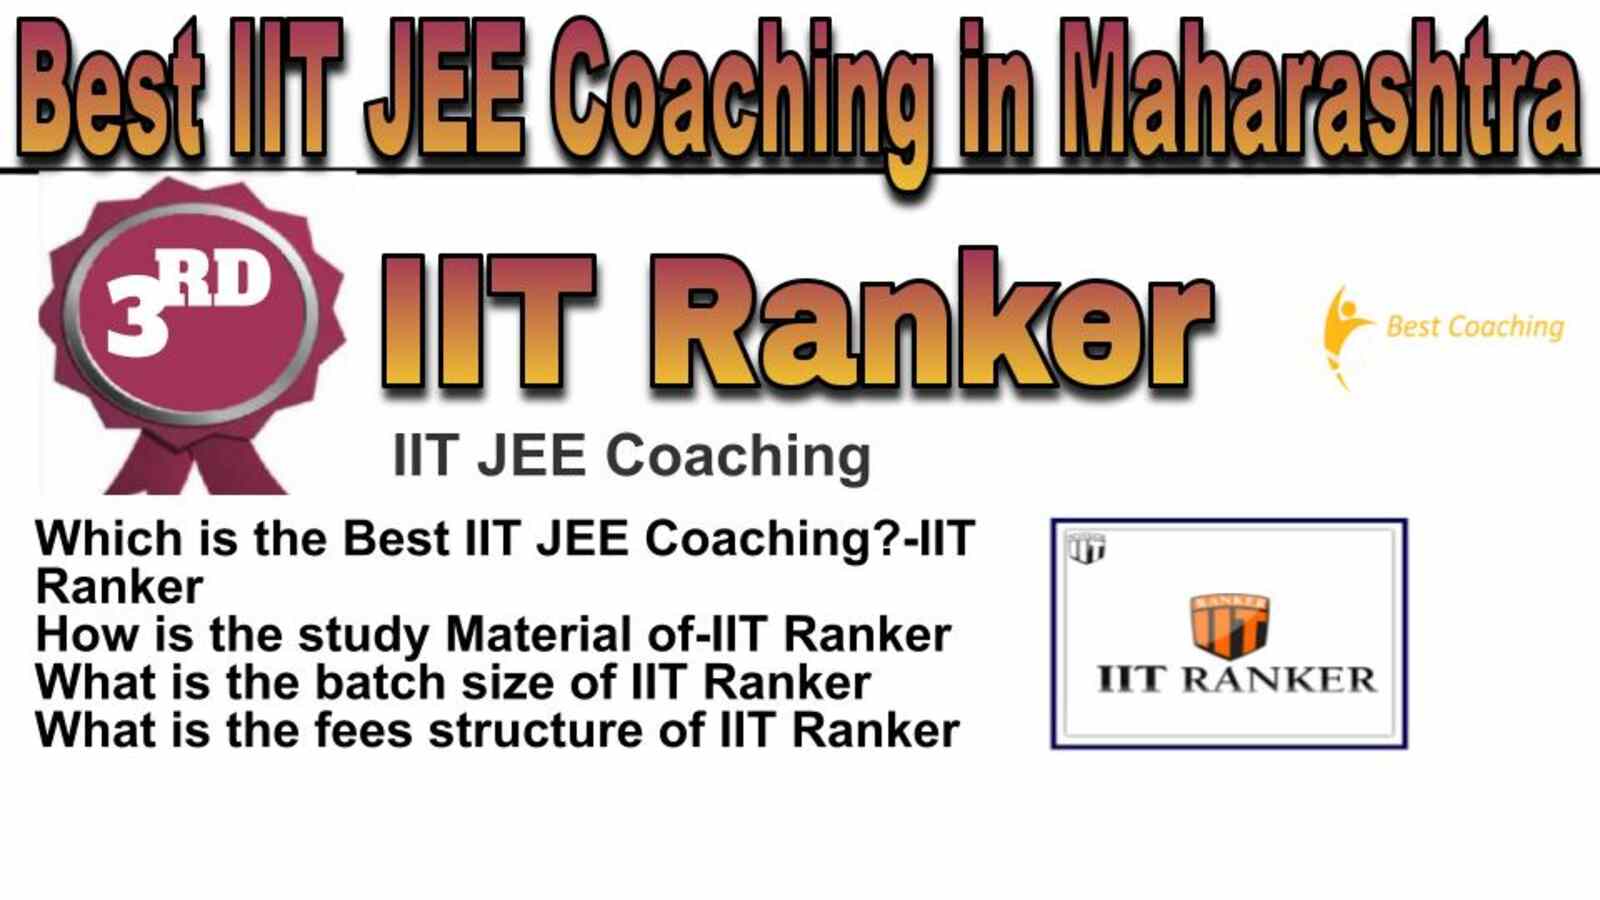 Rank 3 best IIT JEE coaching in Maharashtra